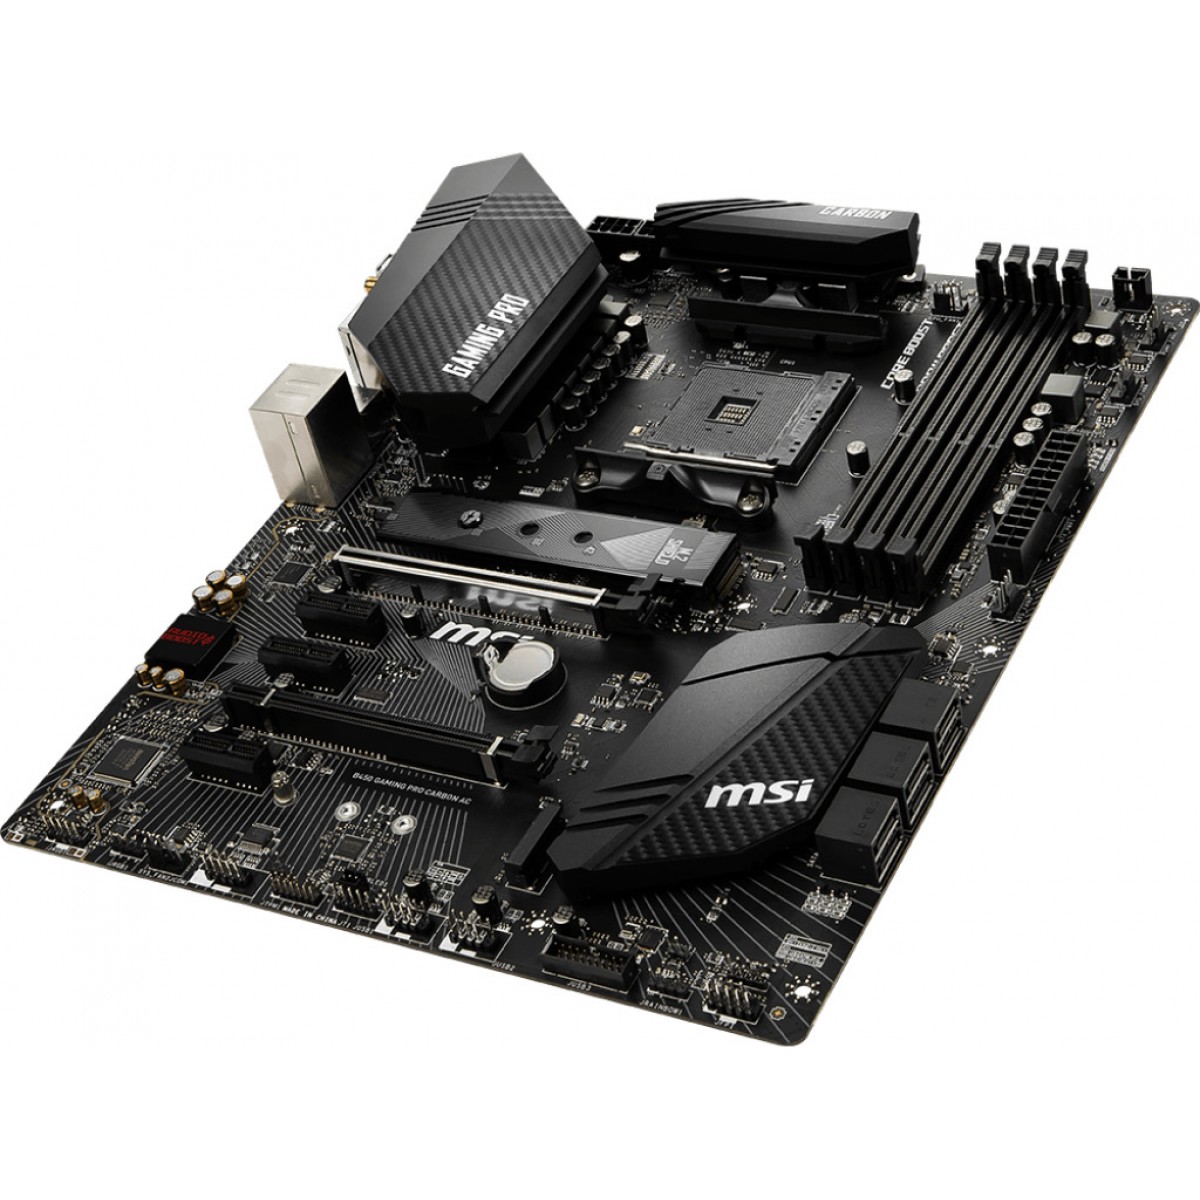 Motherboard MSI B450 Gaming Pro Carbon AC AM4 AMD 7B85-001R